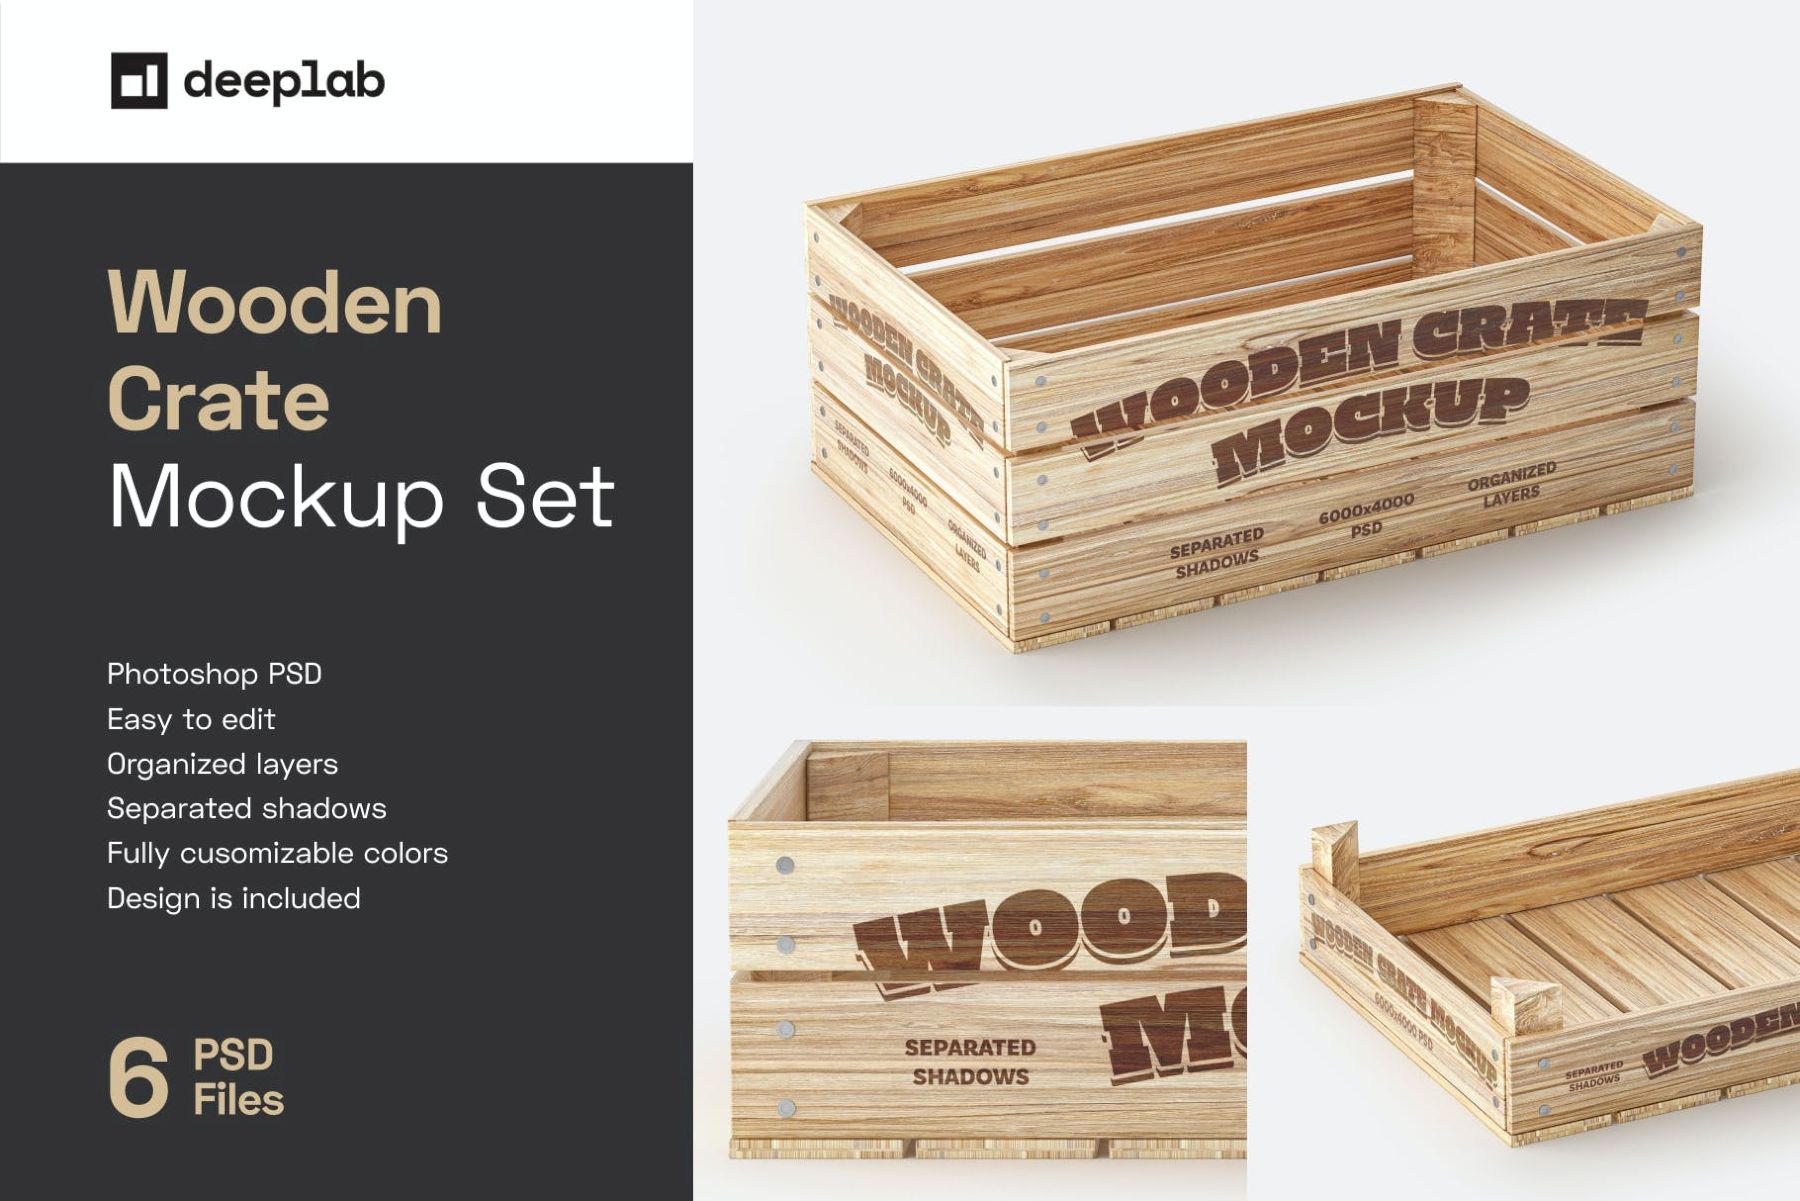 木箱样机套装 Wooden Crate Mockup Set插图